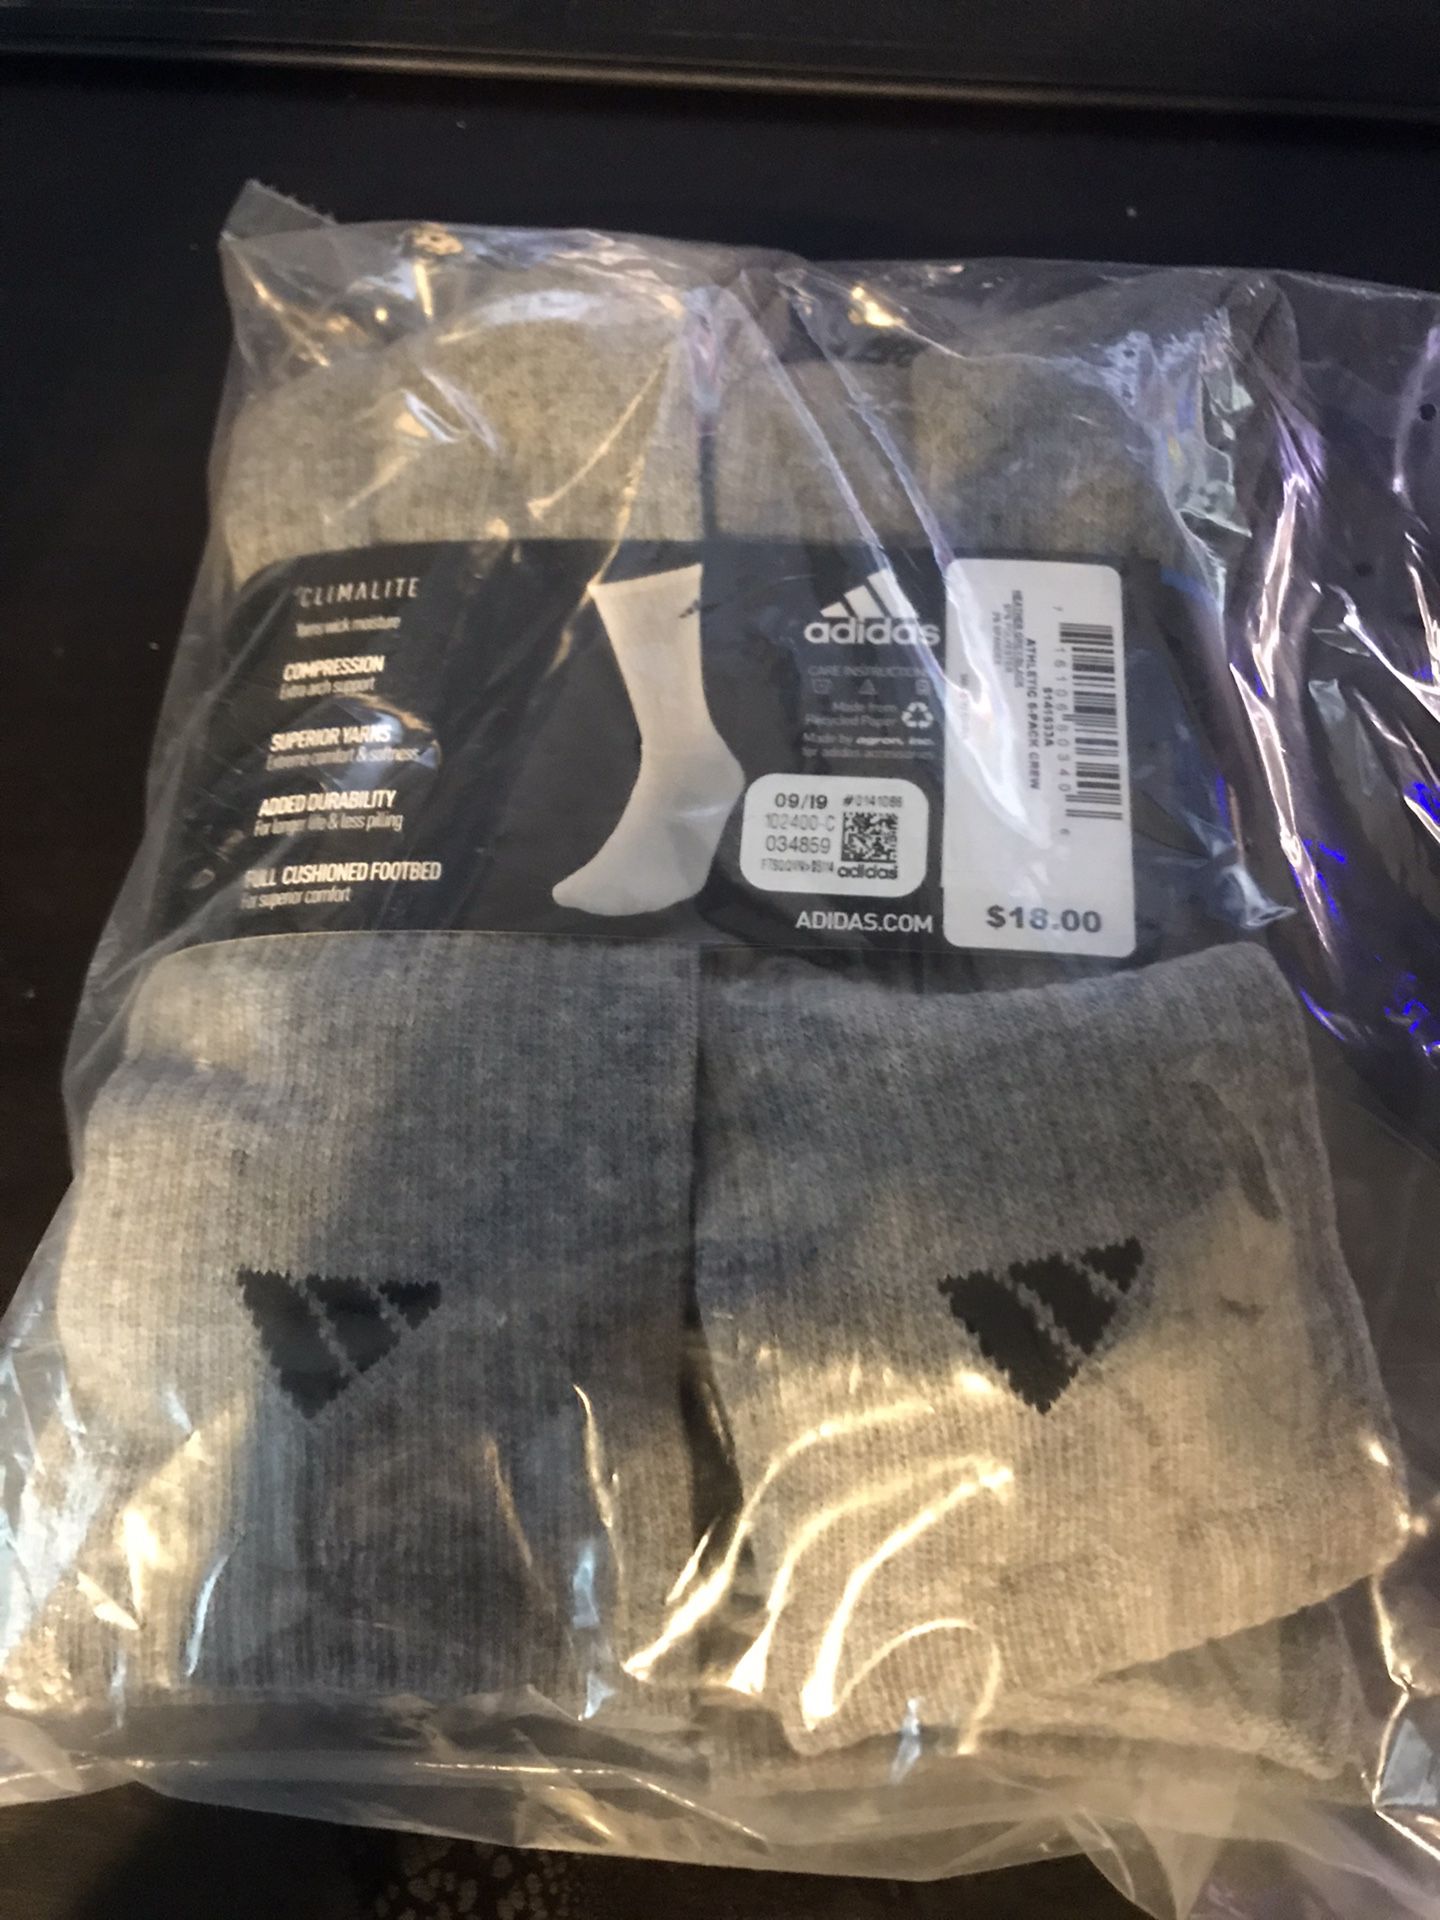 New Adidas gray crew socks size 6-12